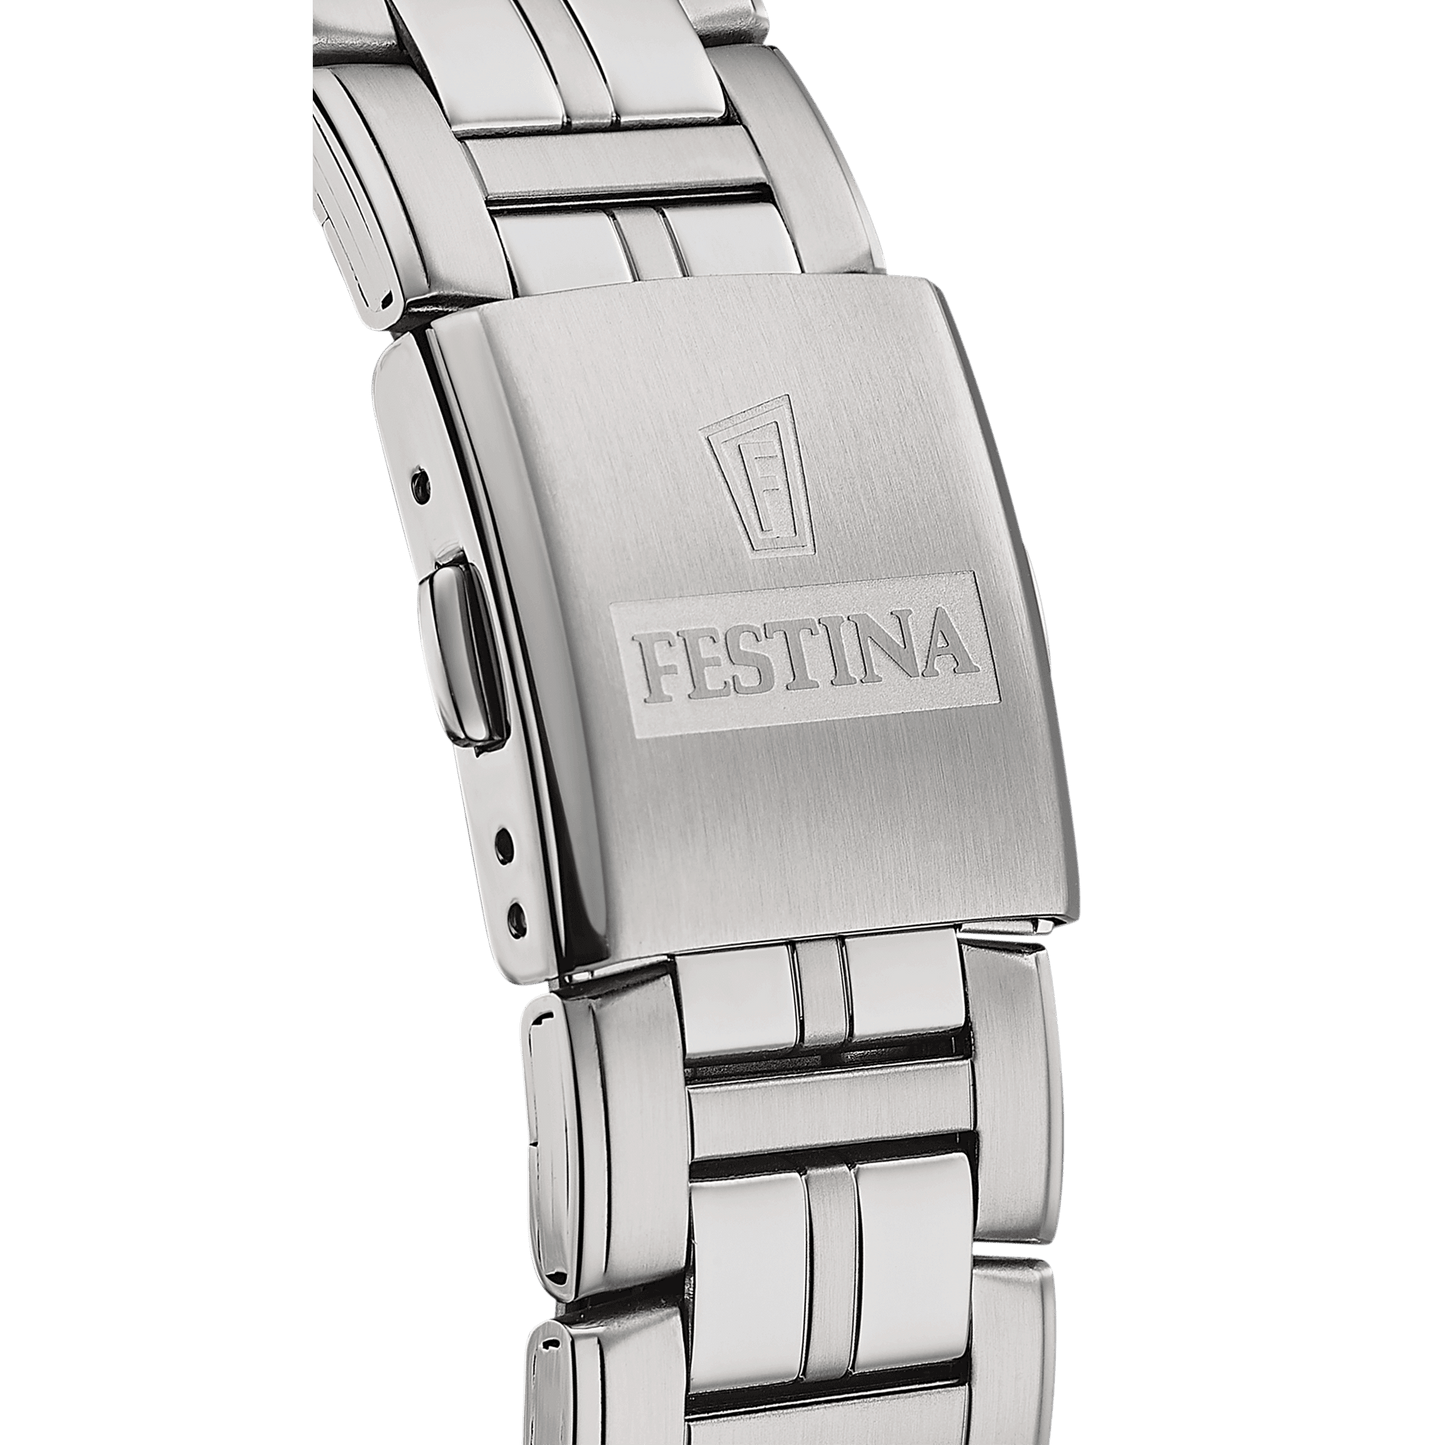 Multifunction F20445-1 - Multifunction | Festina Watches US